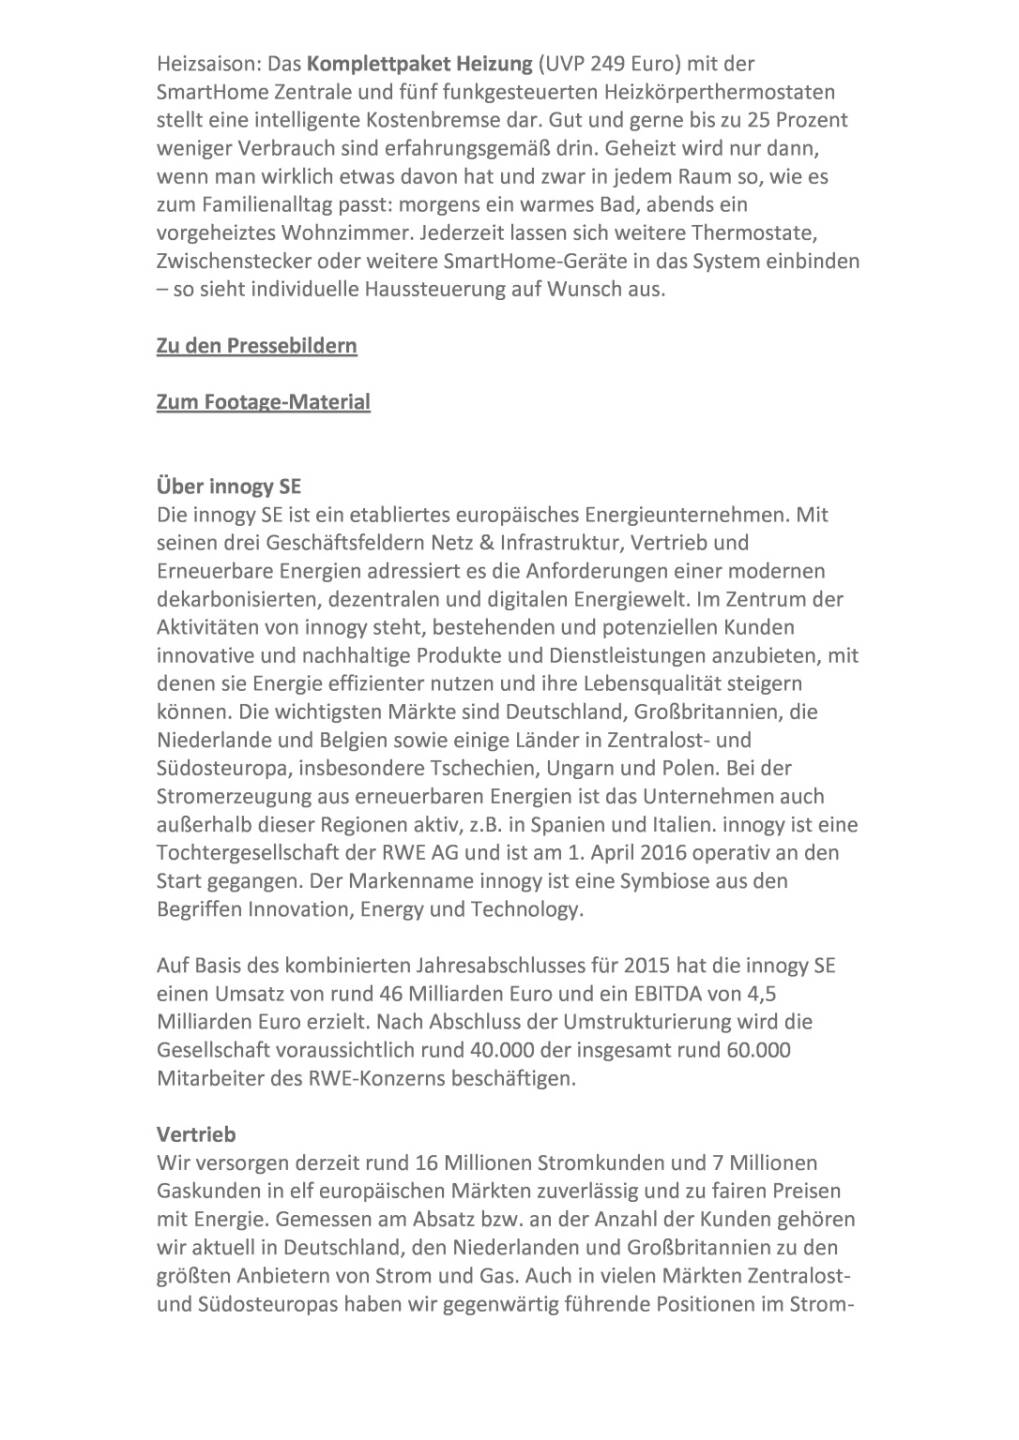 innogy: Neue SmartHome-Pakete zur IFA, Seite 3/4, komplettes Dokument unter http://boerse-social.com/static/uploads/file_1713_innogy_neue_smarthome-pakete_zur_ifa.pdf